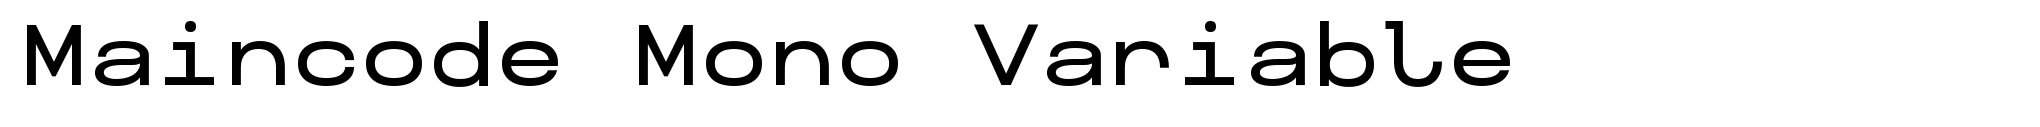 Maincode Mono Variable image